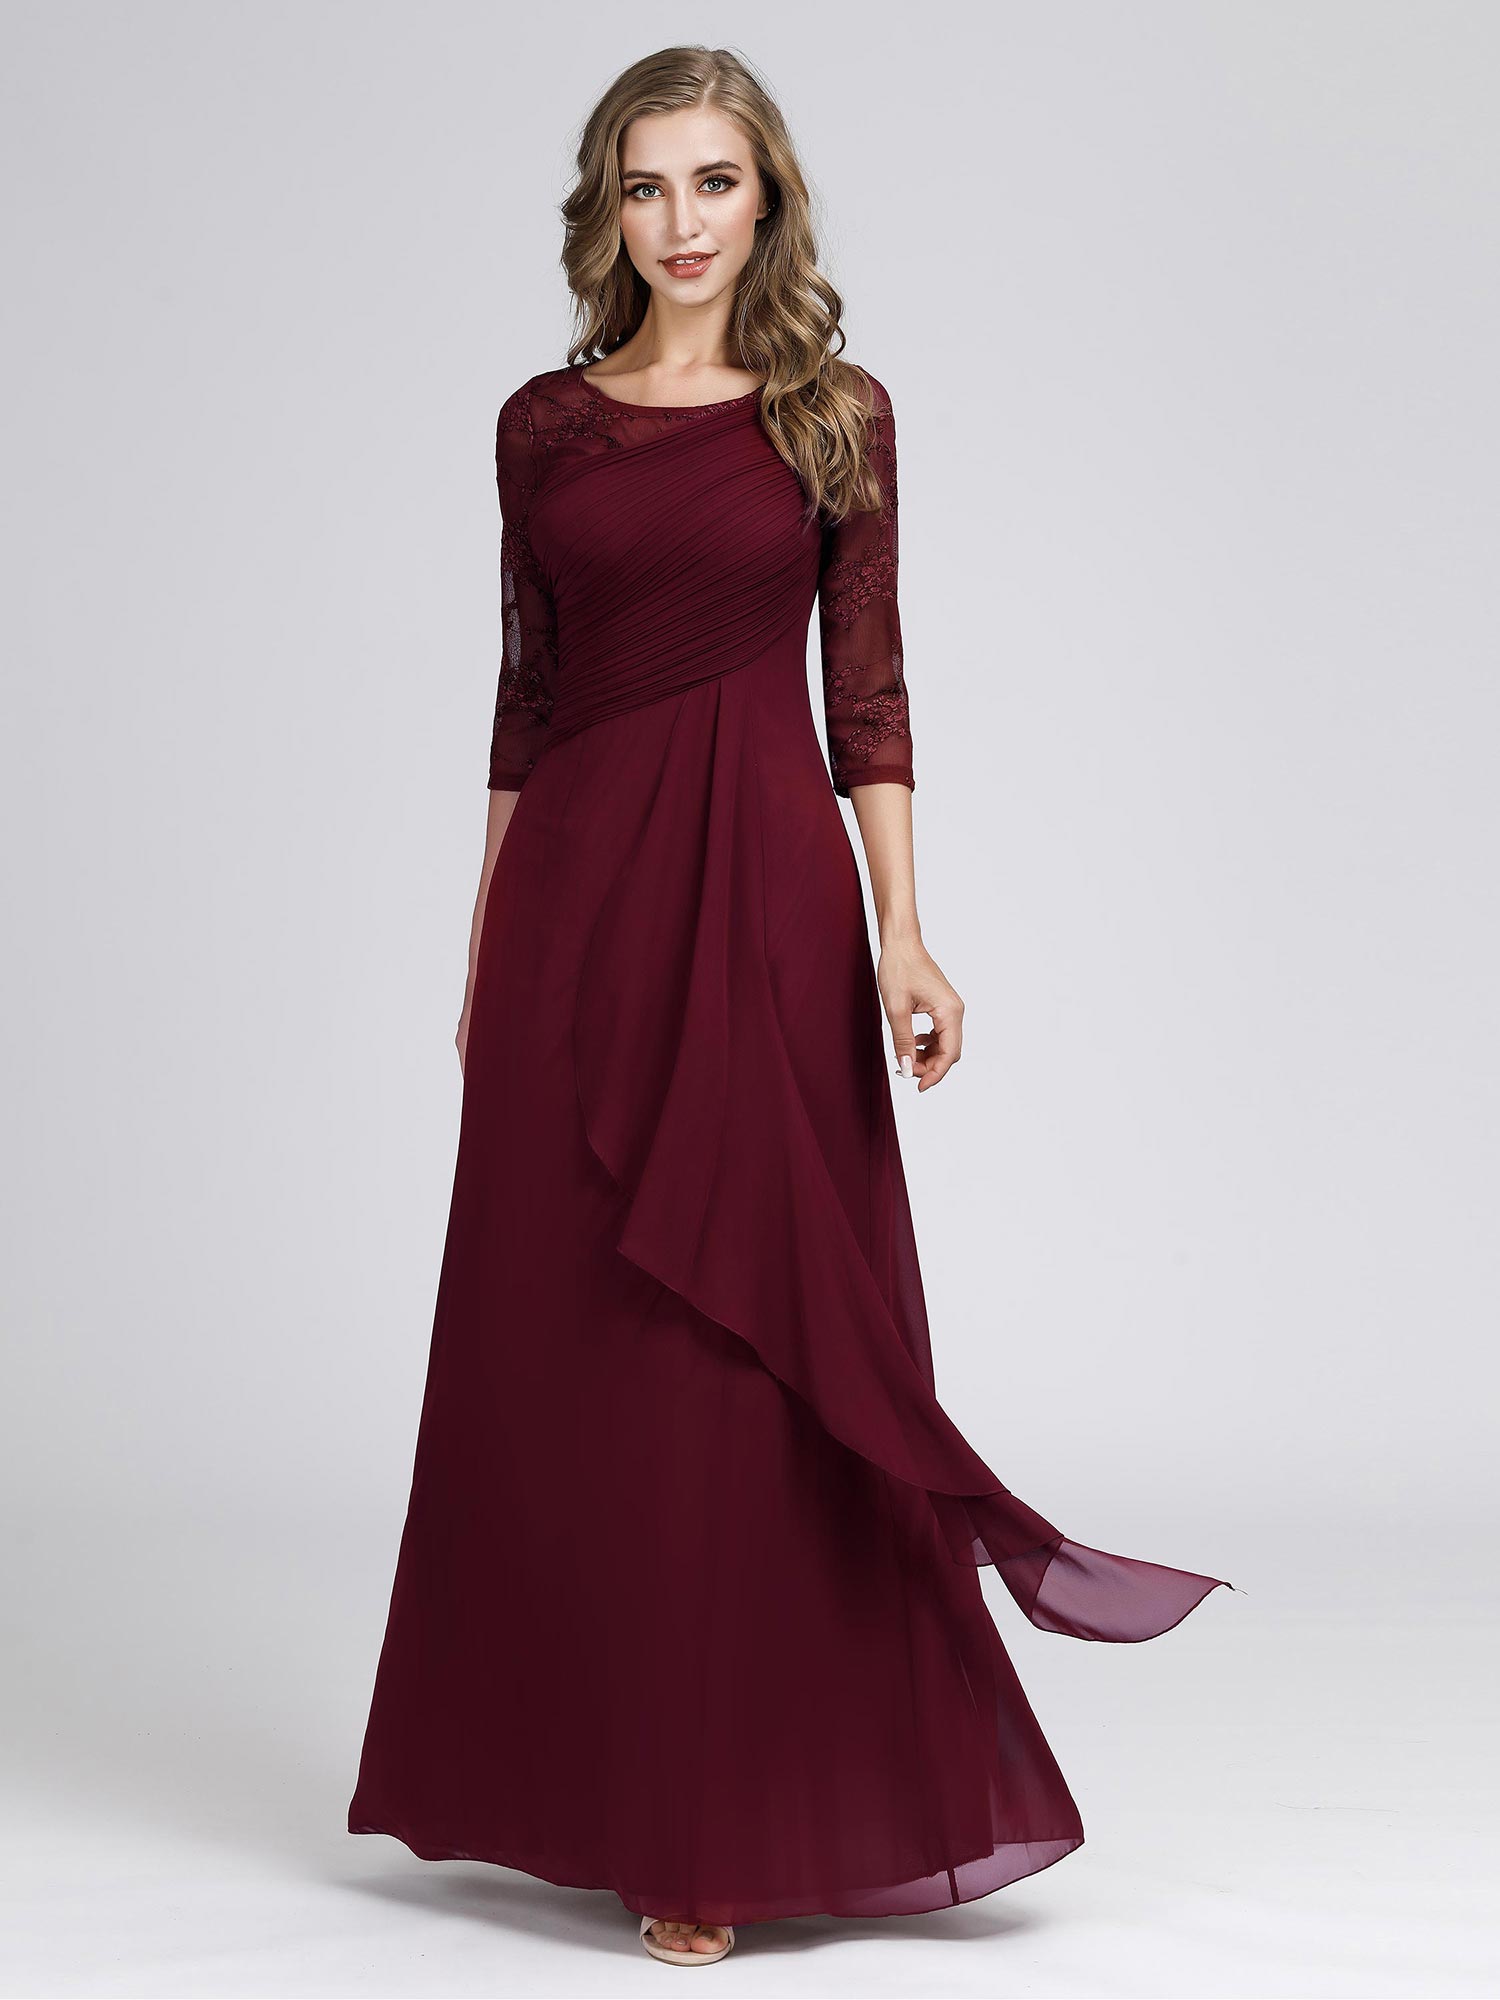 Exquisite Long Sleeve Women's Evening Gown